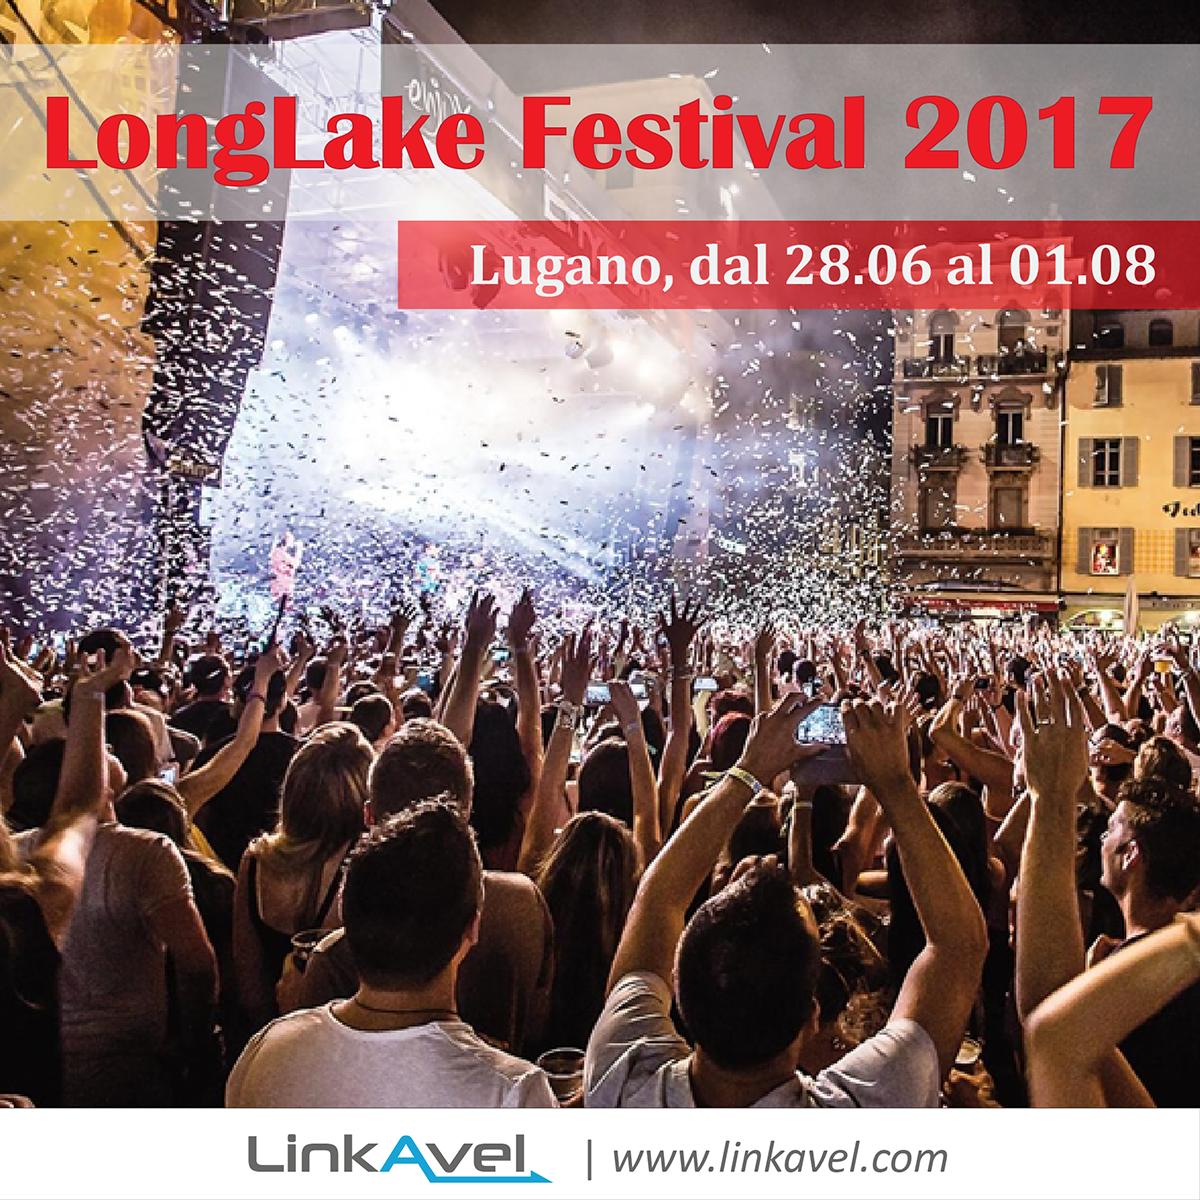 Longlake Festival Lugano 2017